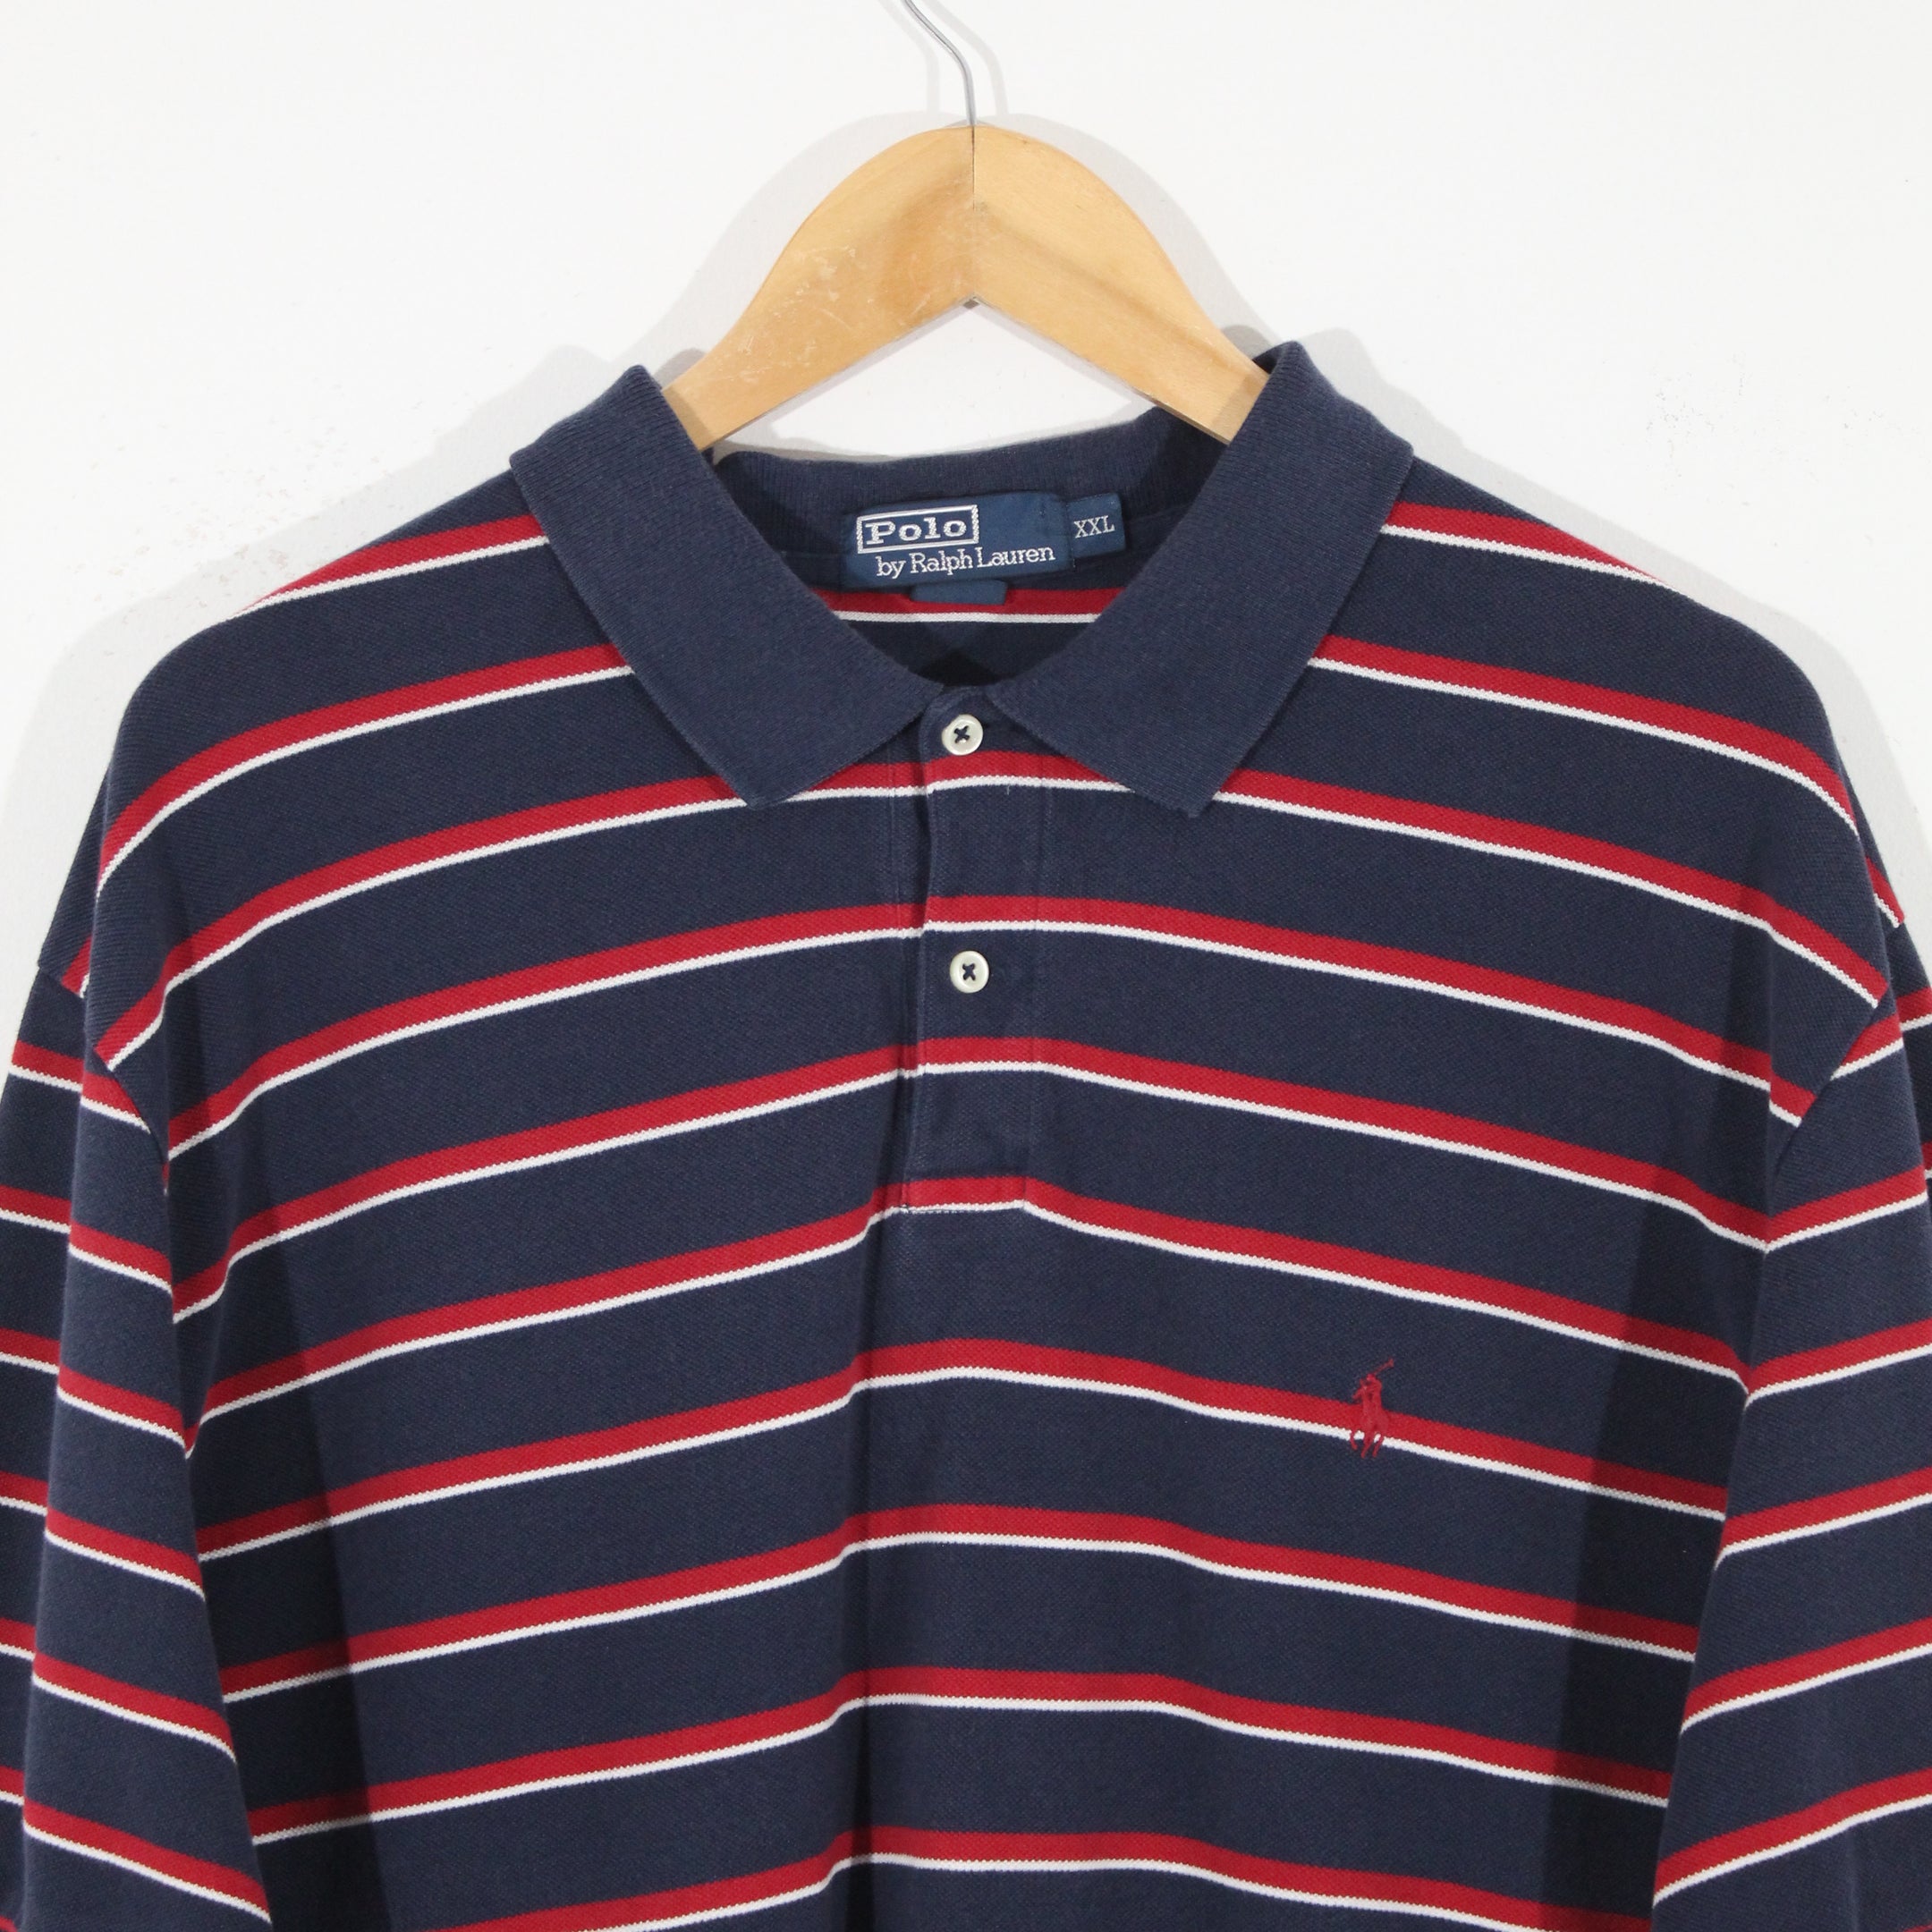 Vintage Ralph Lauren Striped Polo Shirt (2XL)